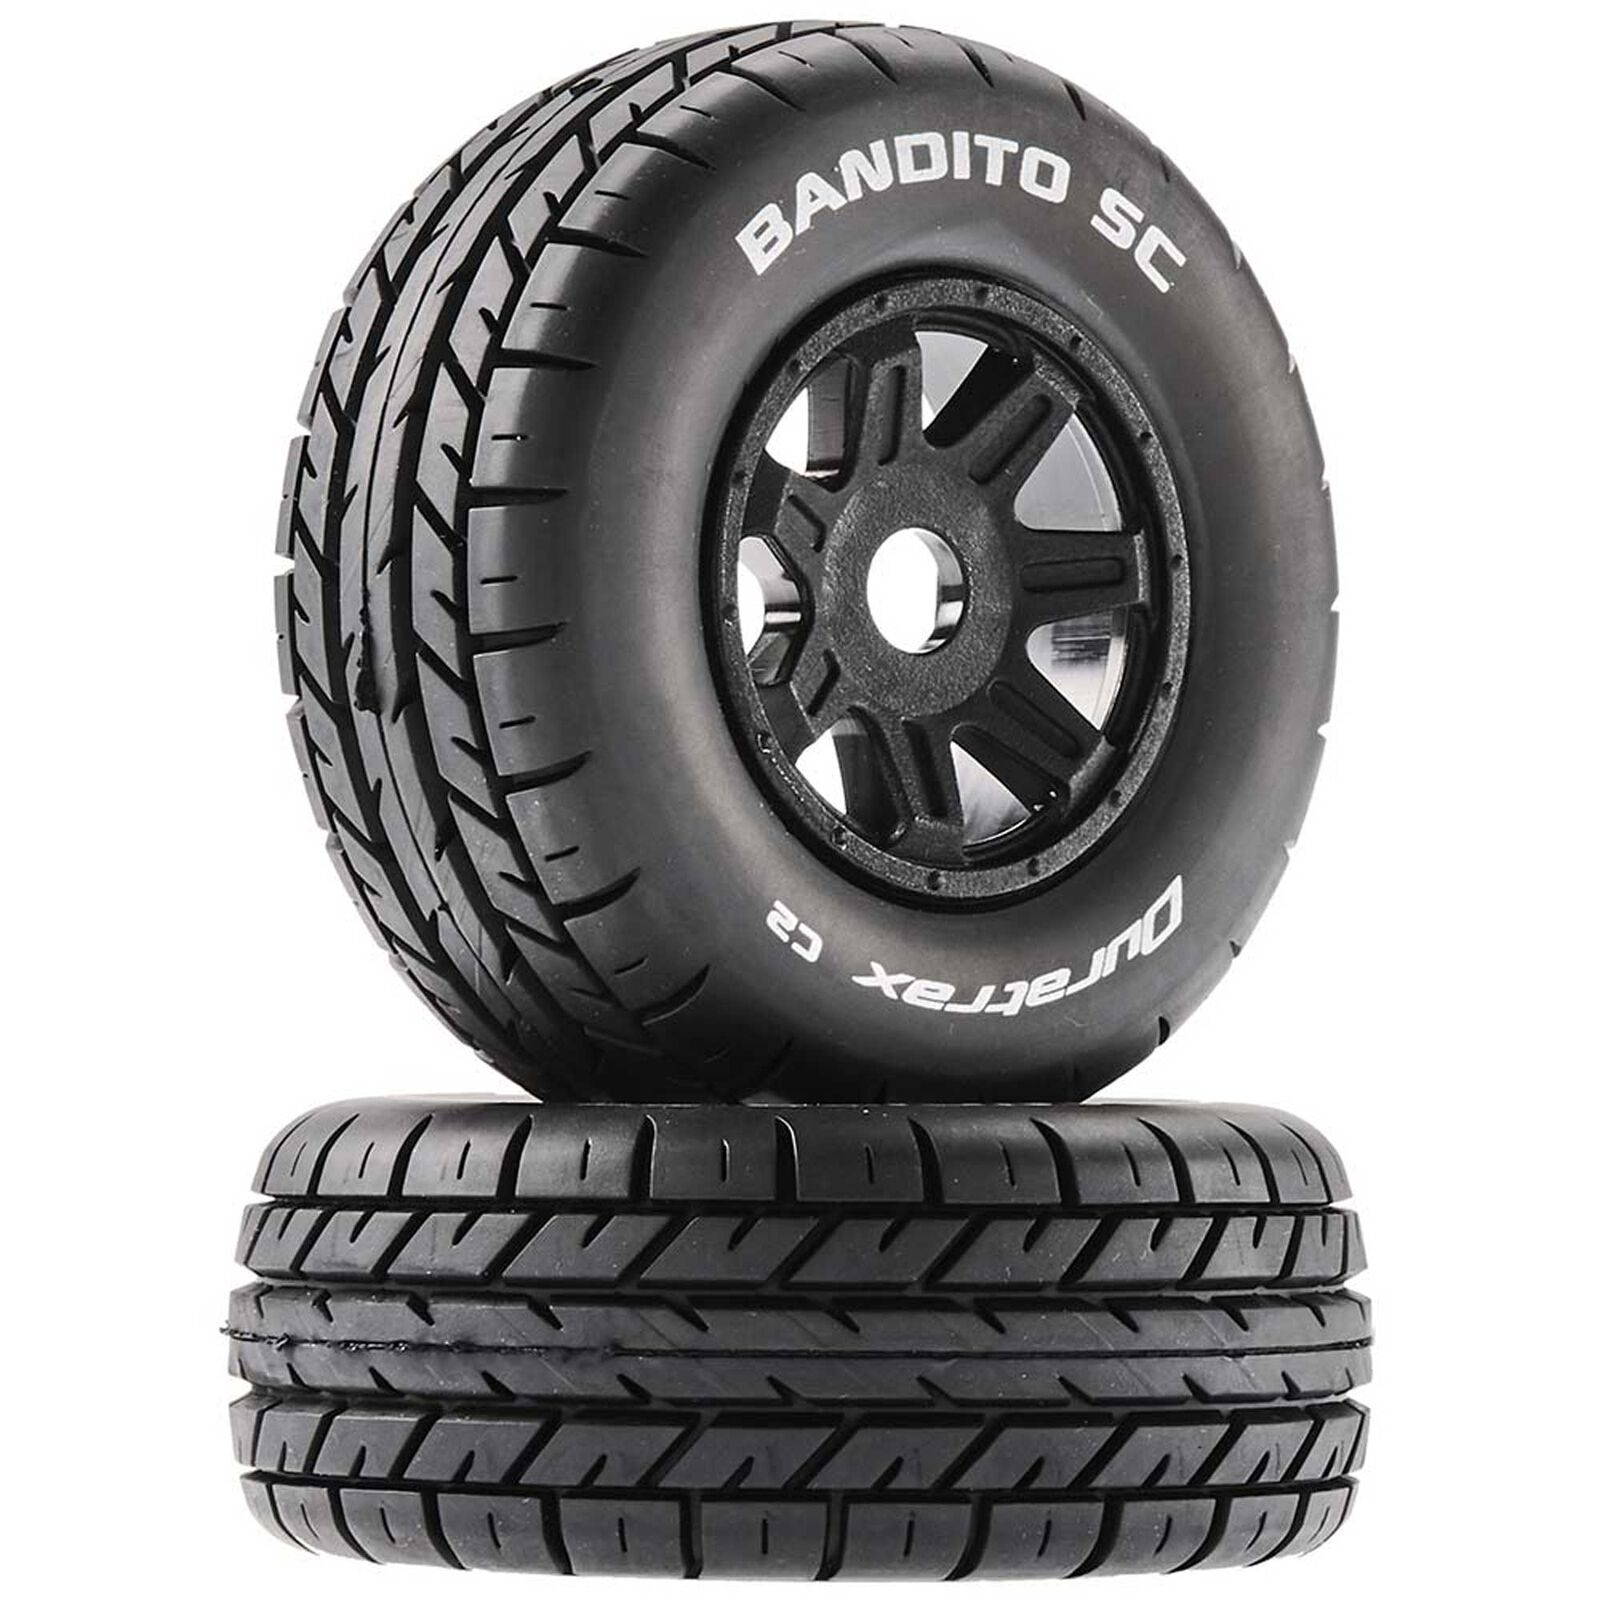 Duratrax DTXC5270 - Bandito SC Mounted Soft Tires, Black 17mm Hex